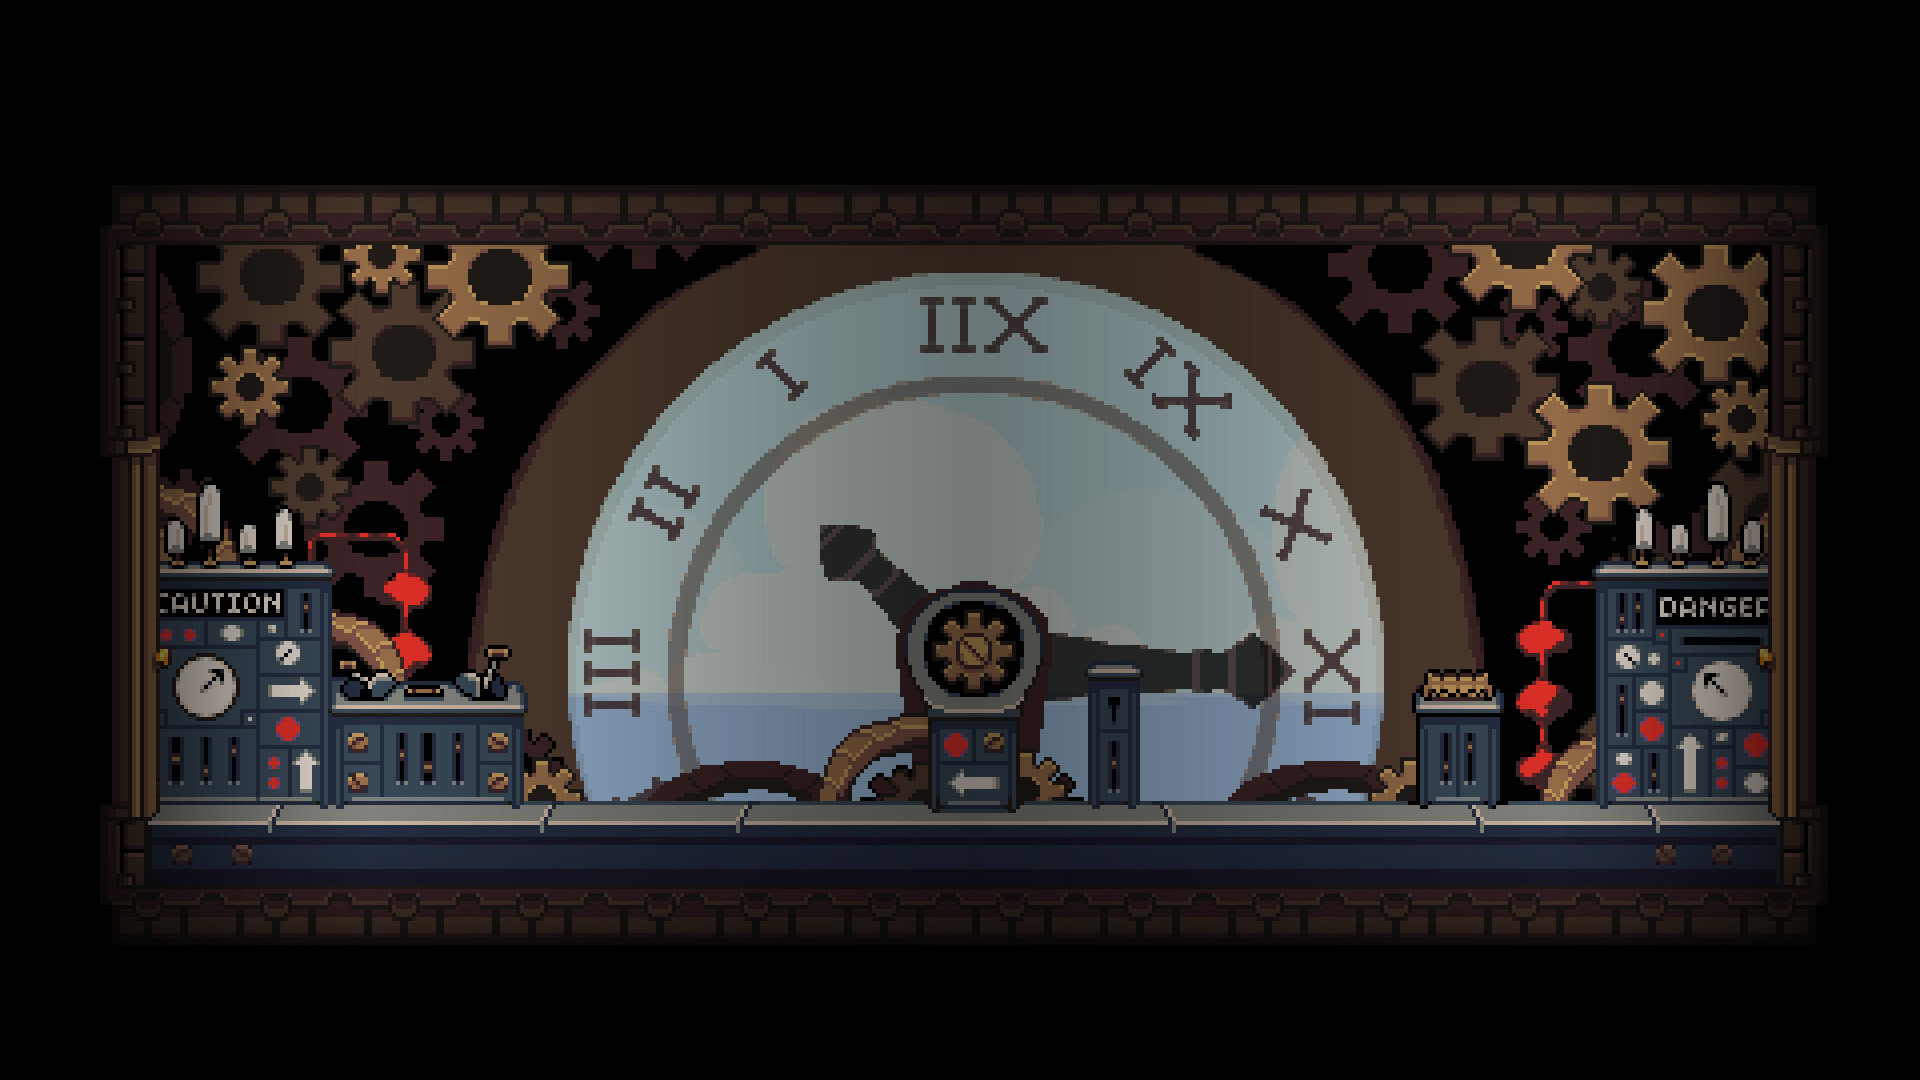 Digital Art Pixel Art Pixels Pixelated Gears Clocks Roman Numerals Video Games Black Background 1920x1080